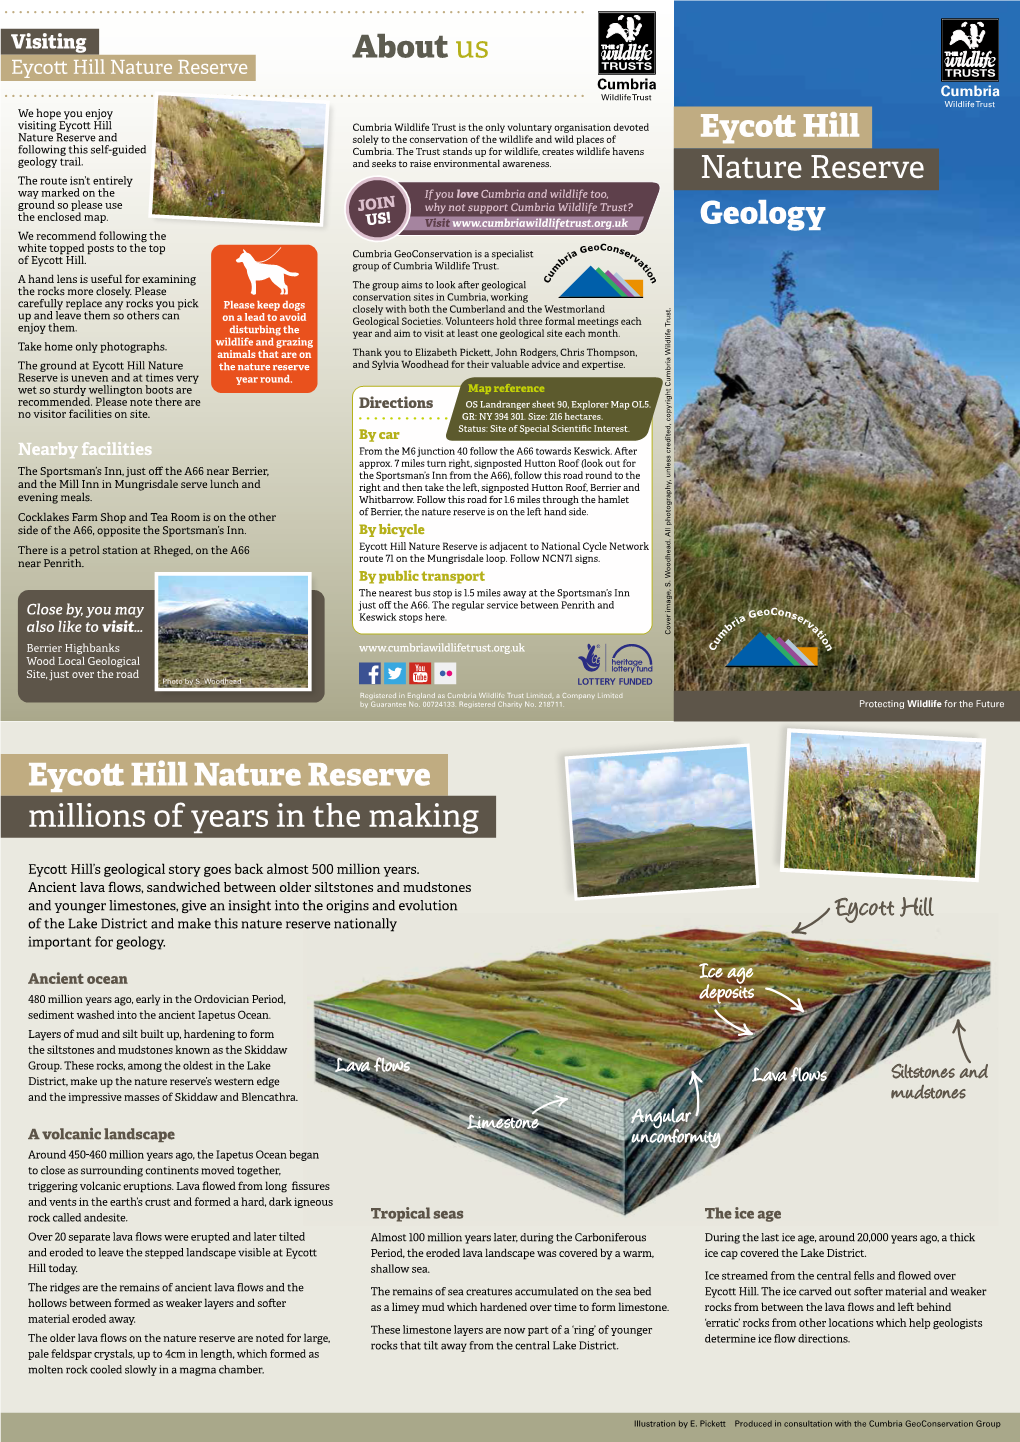 Eycott Hill Nature Reserve Geology Leaflet